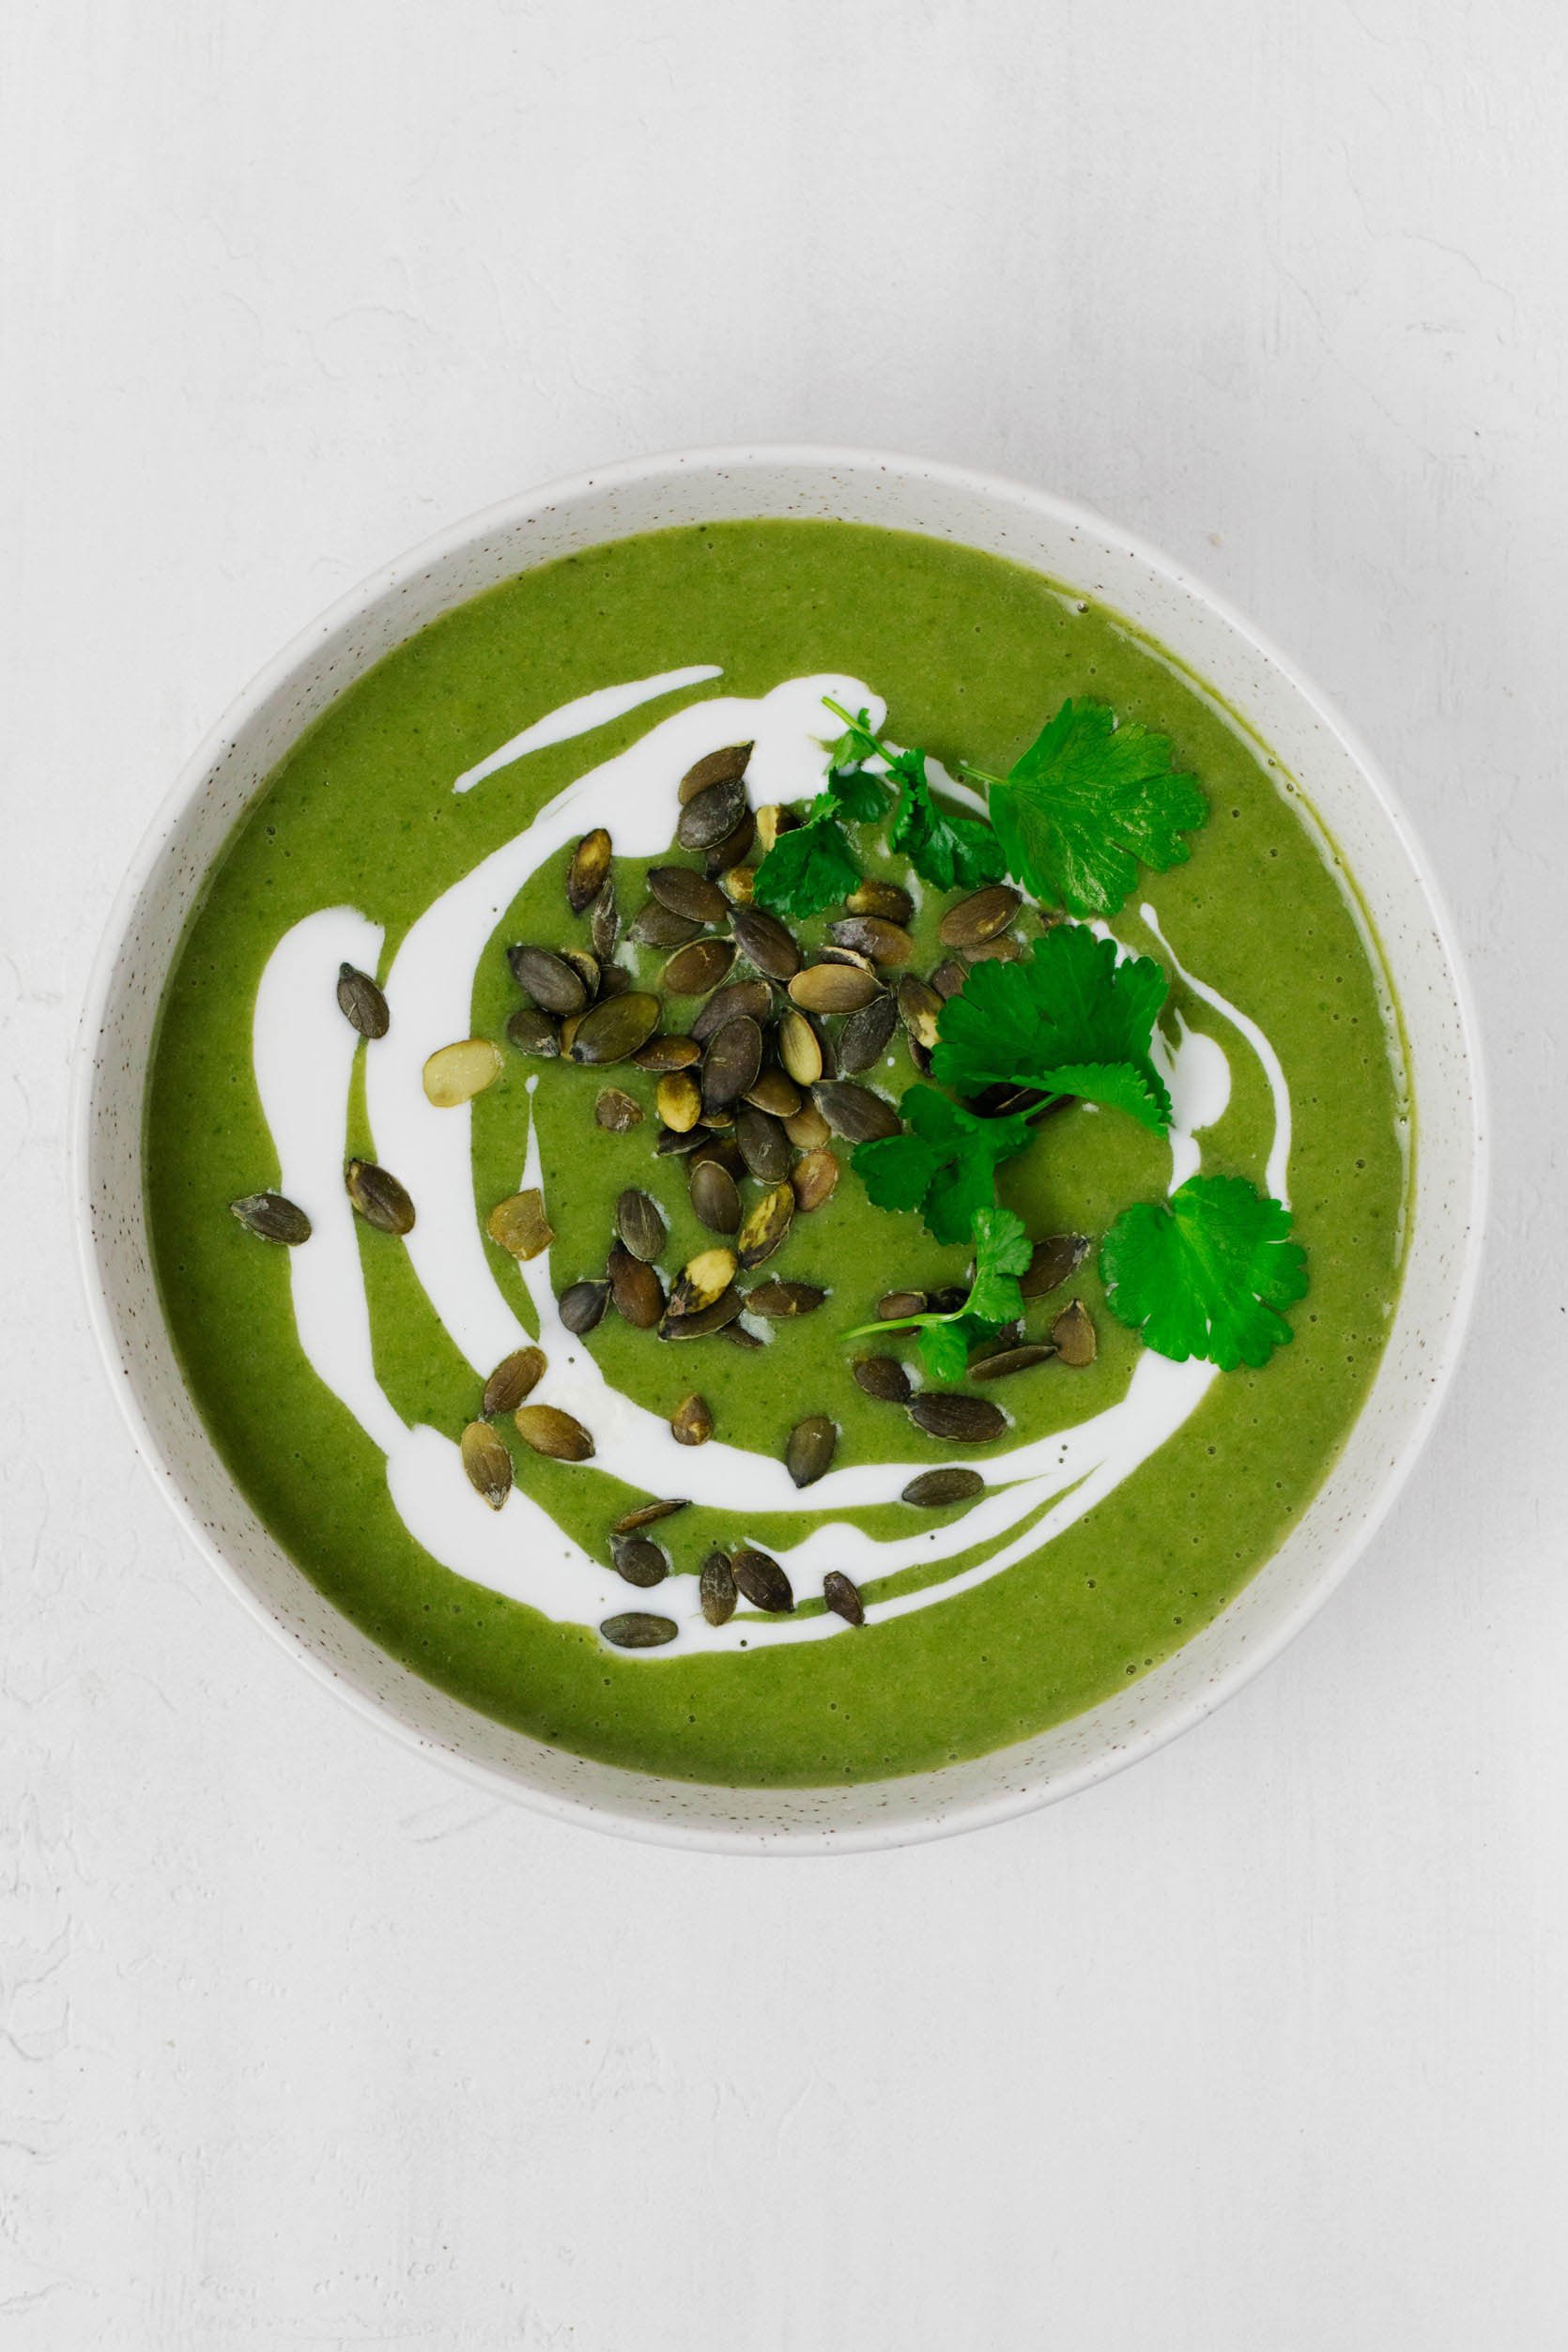 Green Bean Puree - Healthy Little Foodies